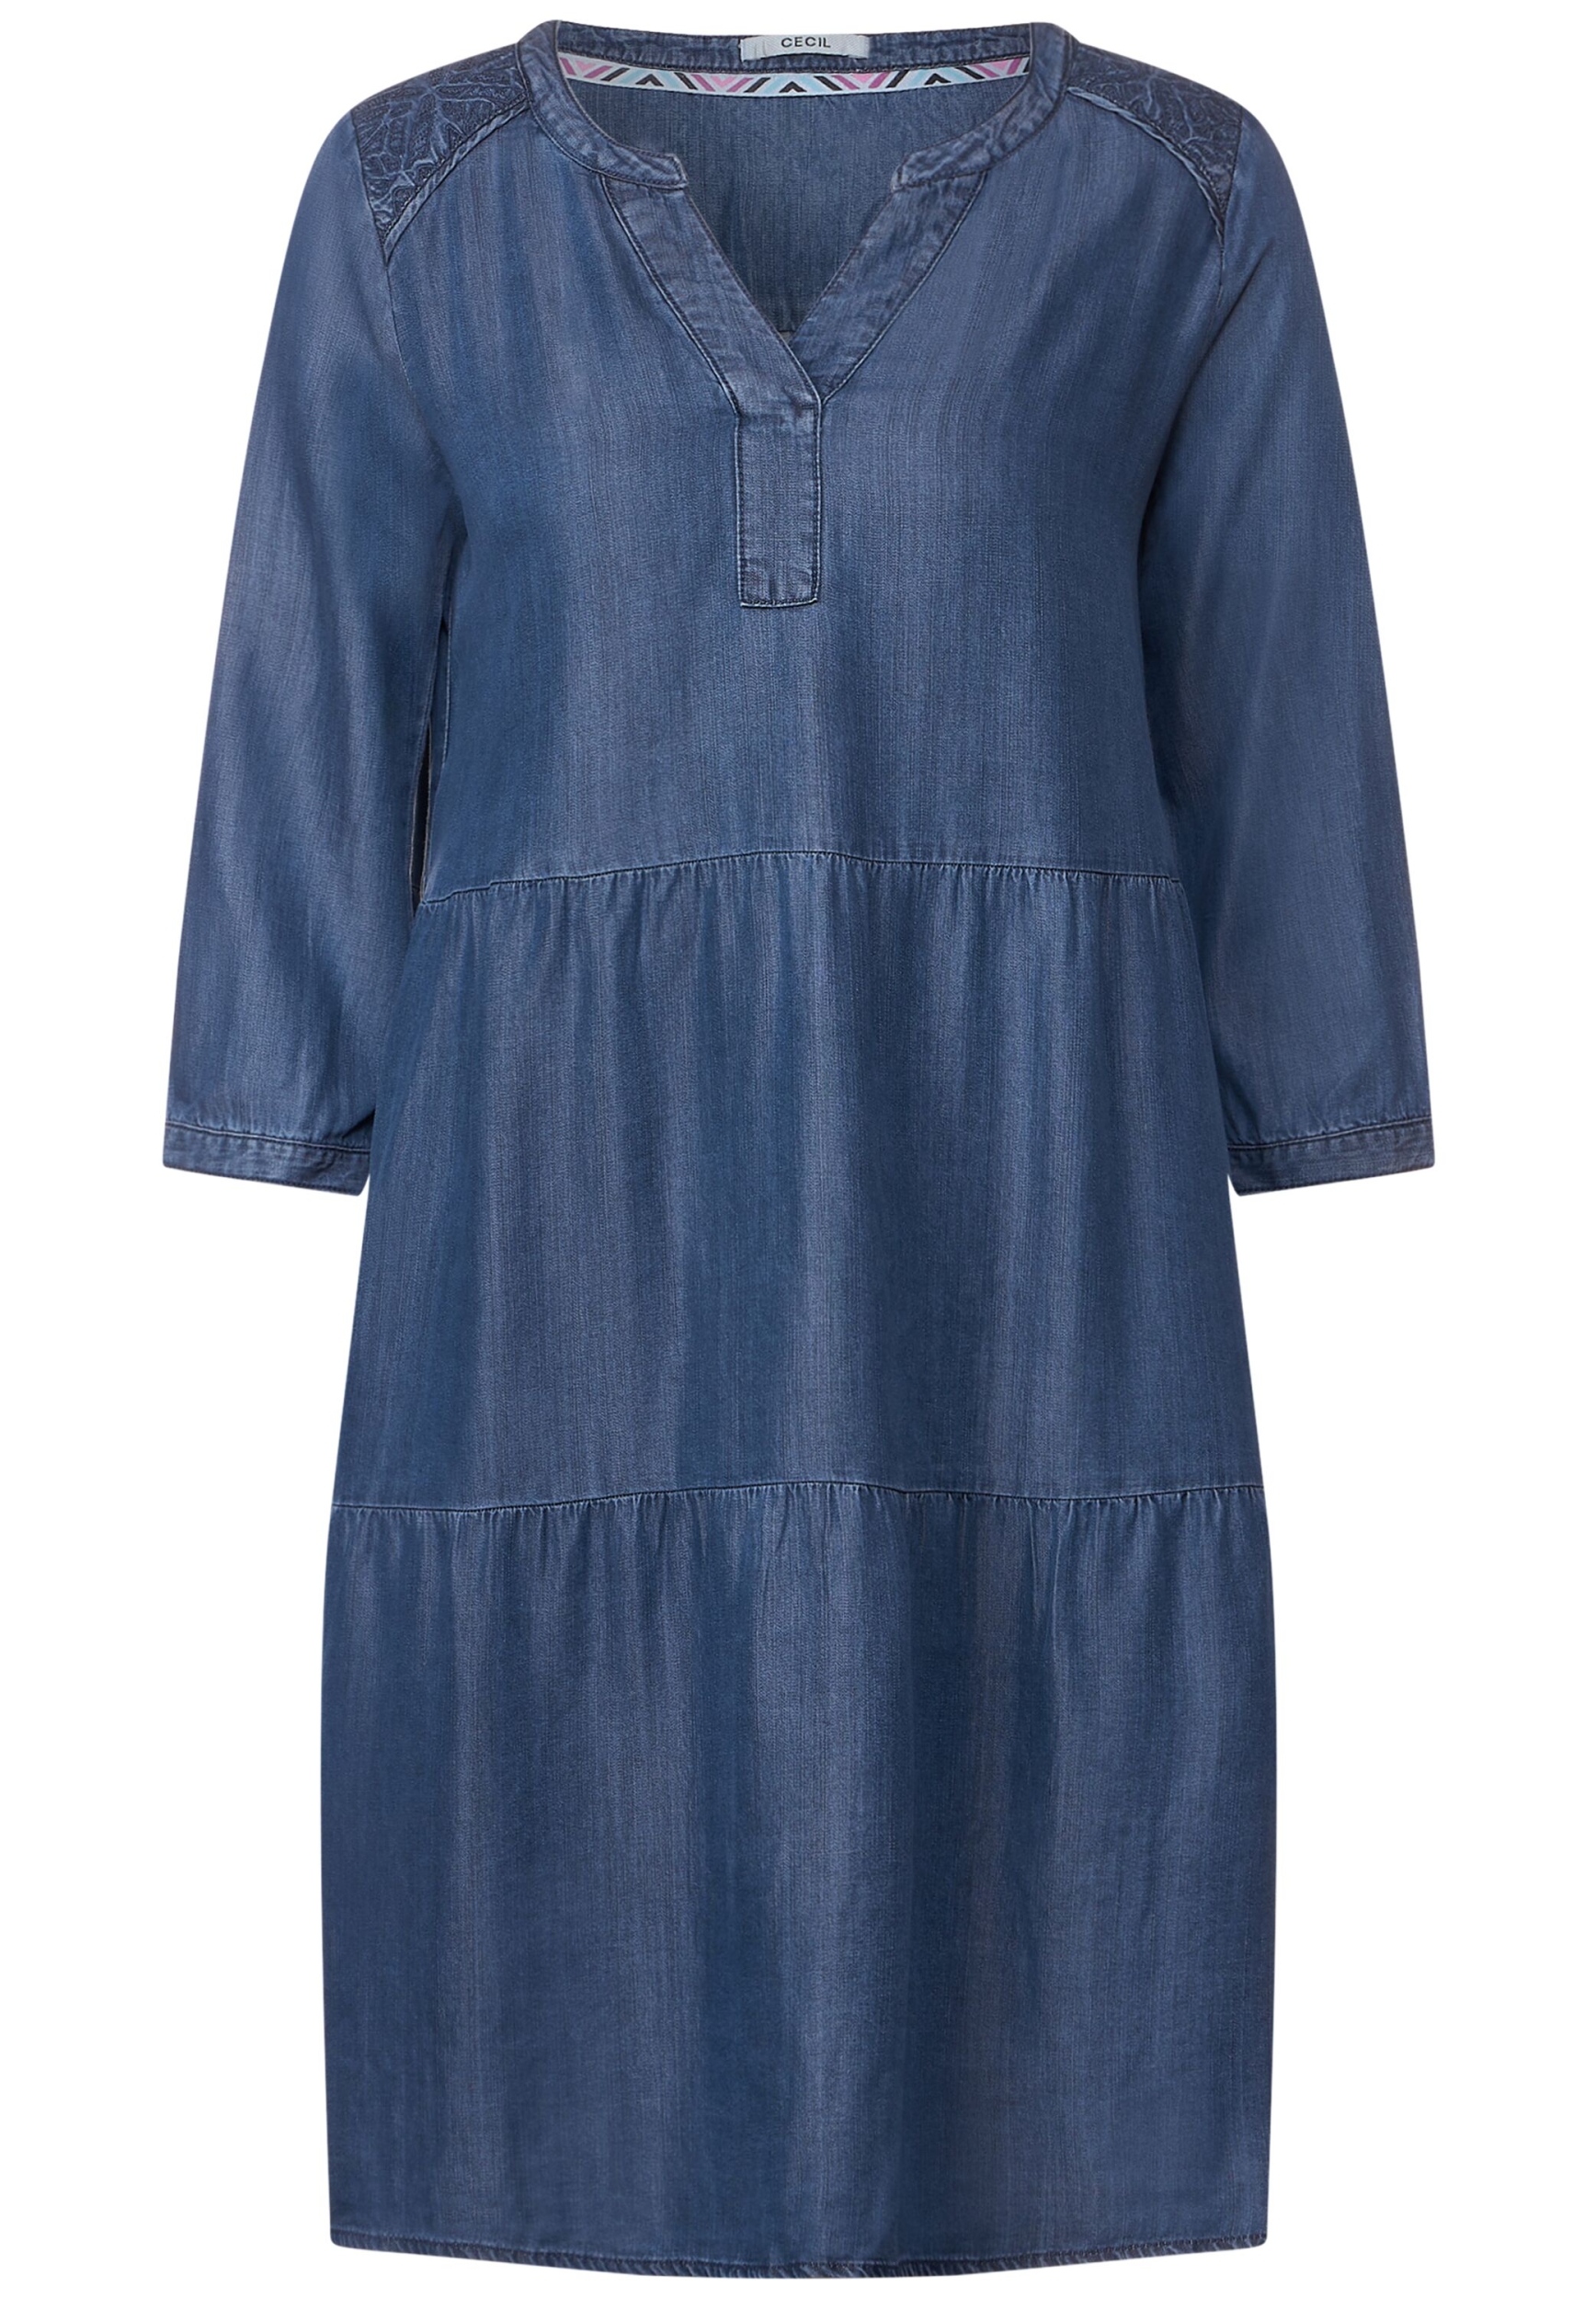 | blue | Embroidery XS B143680-10281-XS | Lyocell mid Dress wash